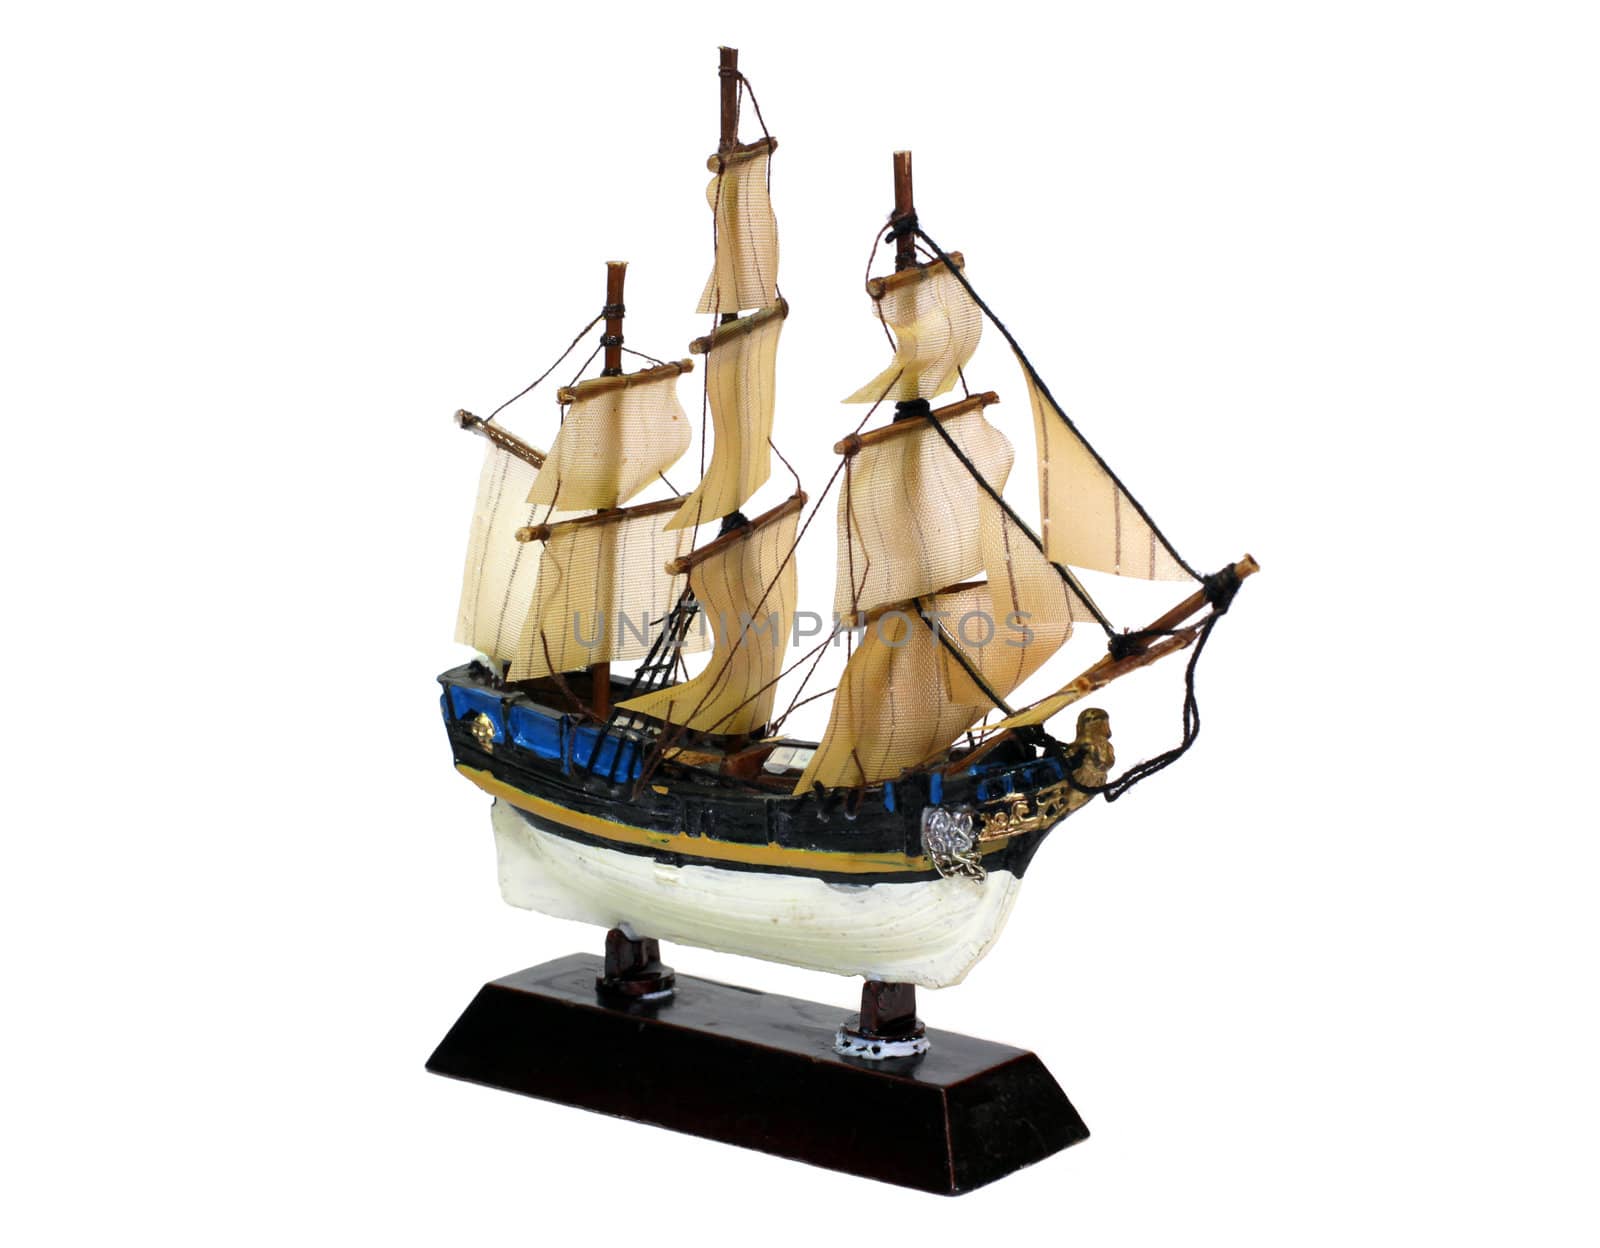 sailing vesse (ship) model isolated on white background